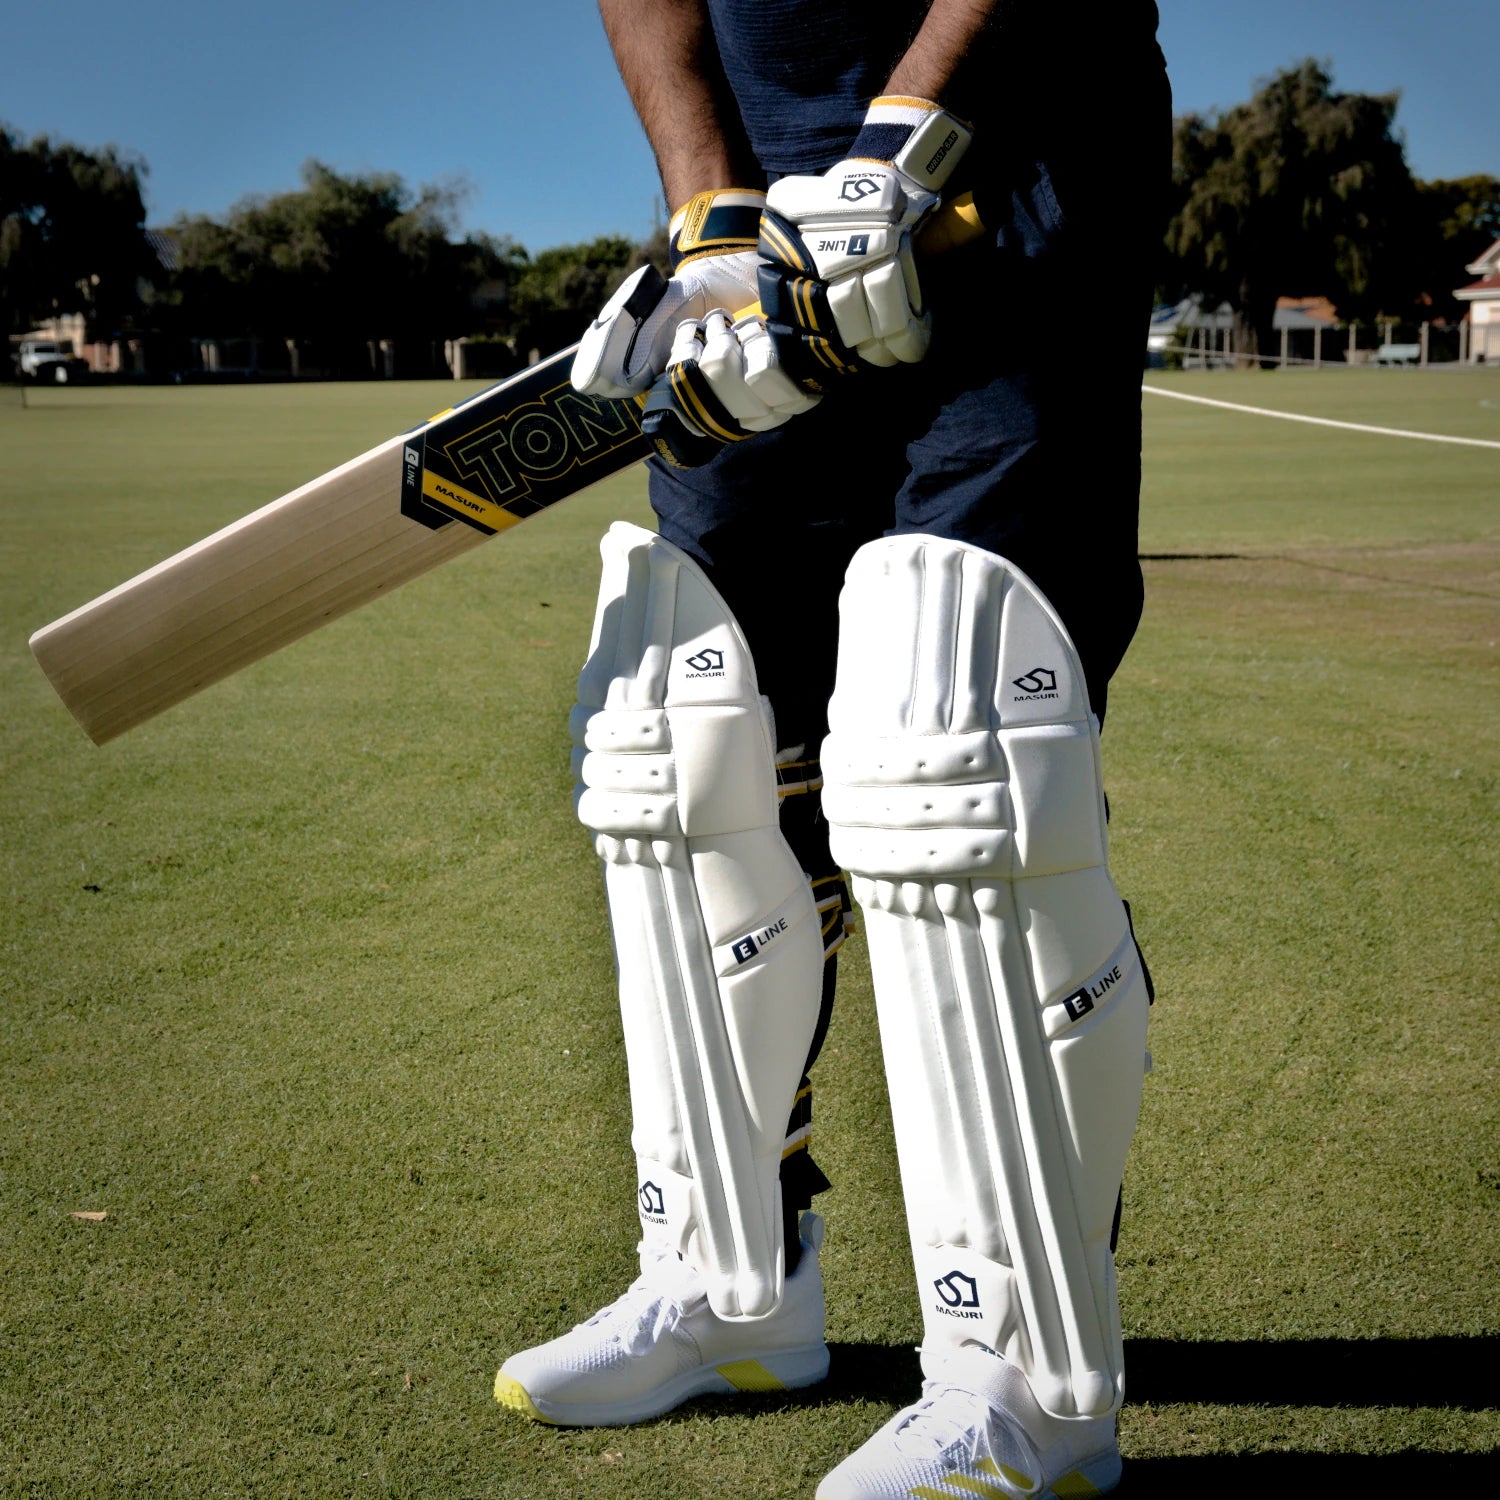 Masuri Cricket Batting Gloves